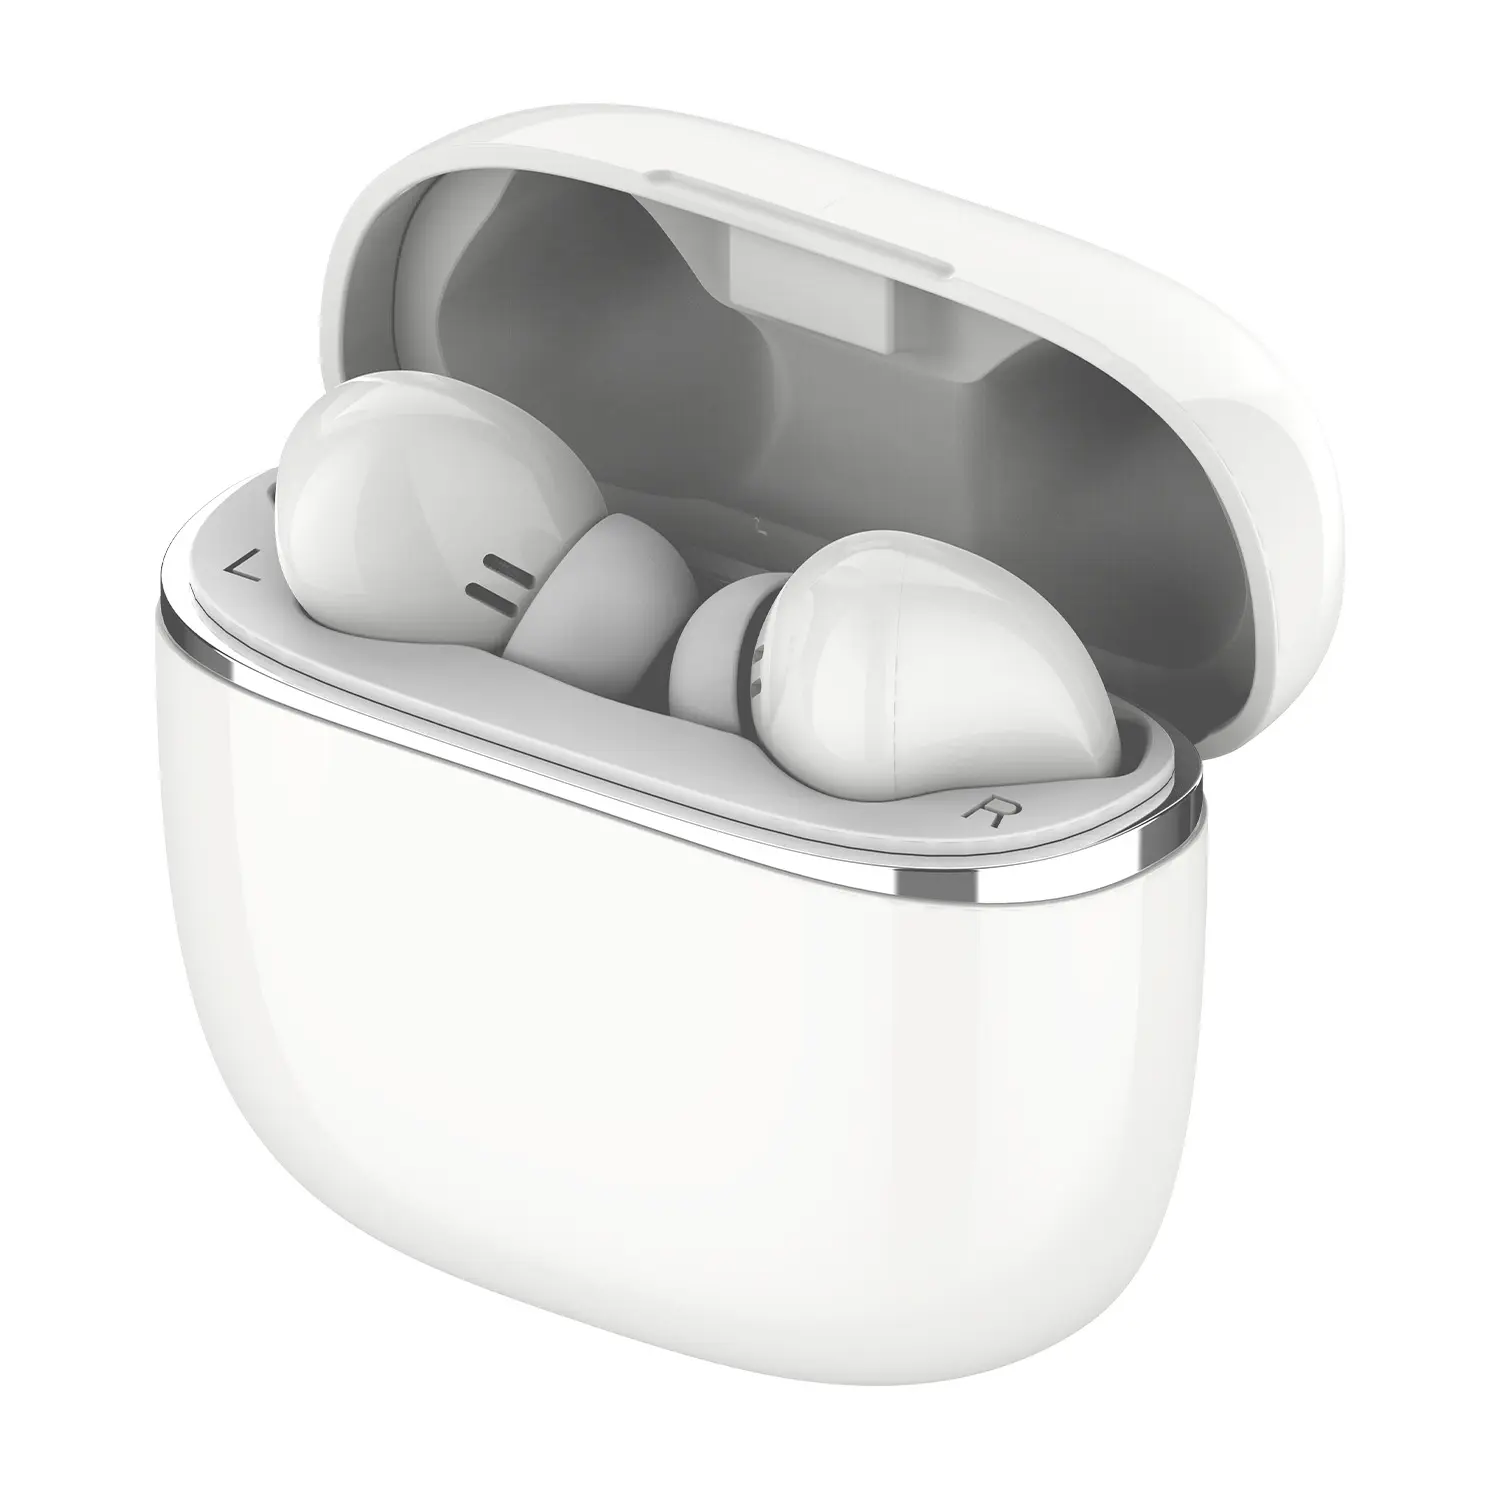 Fones de ouvido bluetooth sem fio amazon, venda quente, mini fones de ouvido android